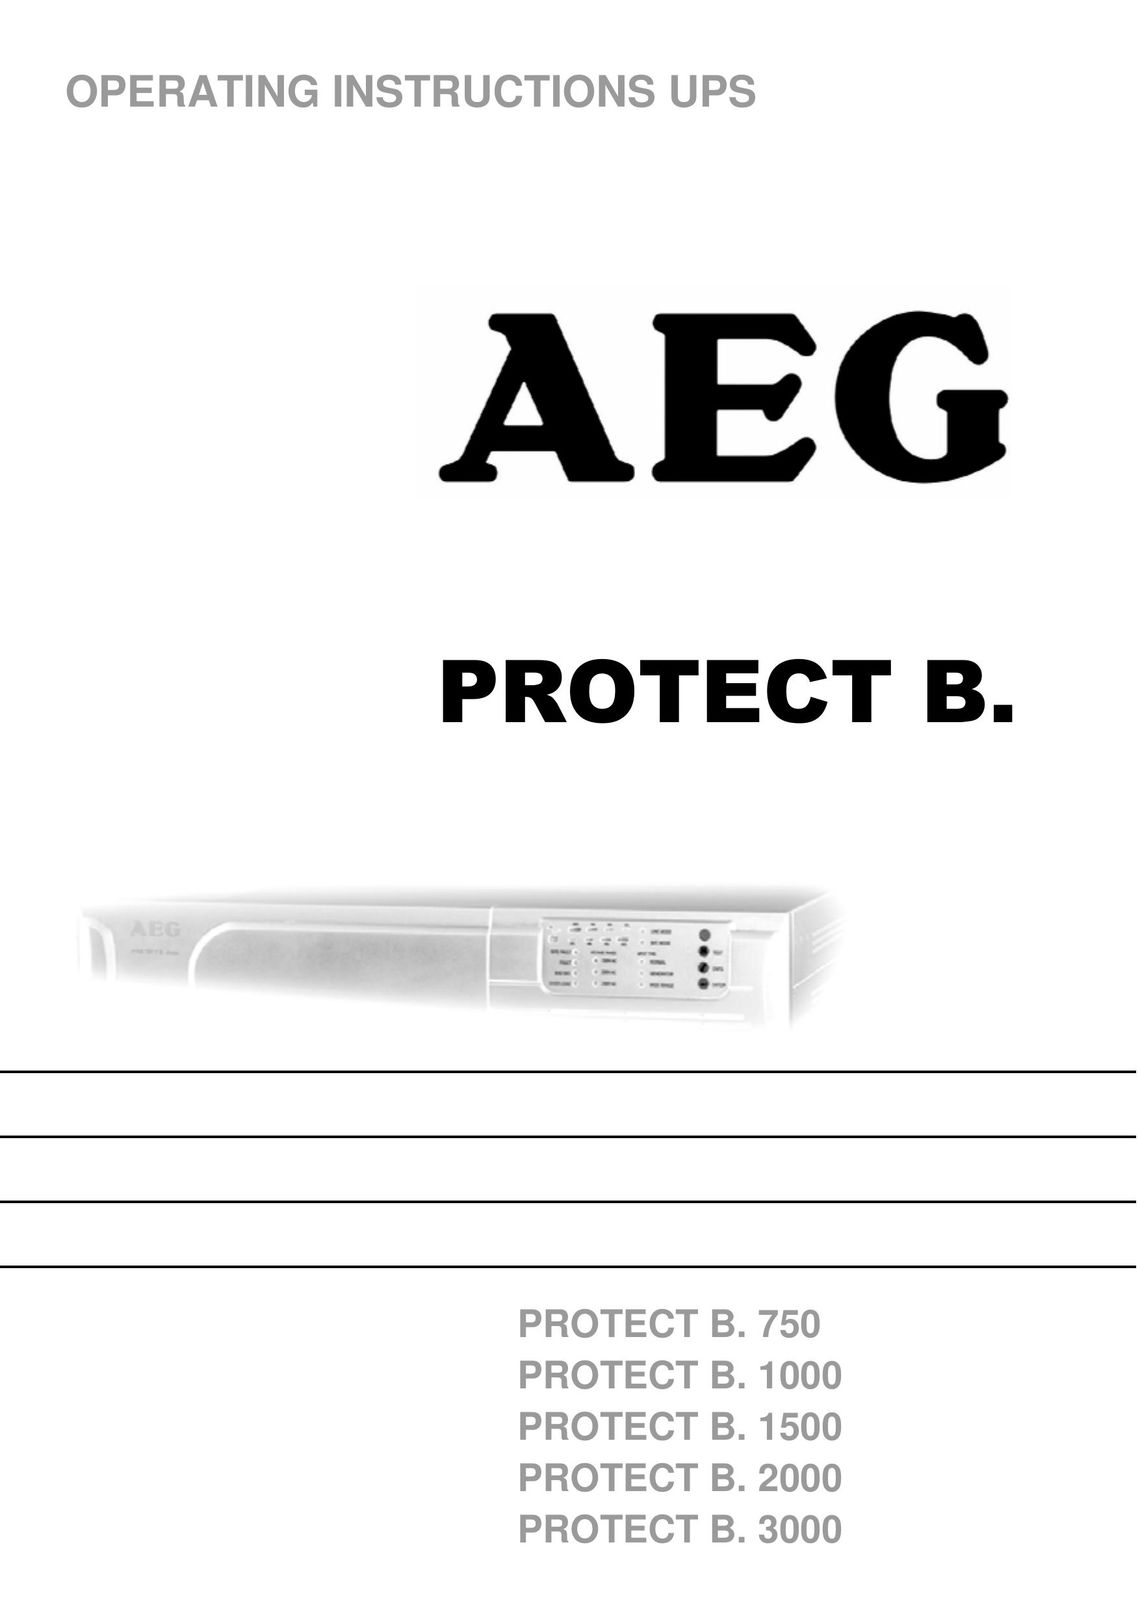 AEG PROTECT B. 3000 Power Supply User Manual